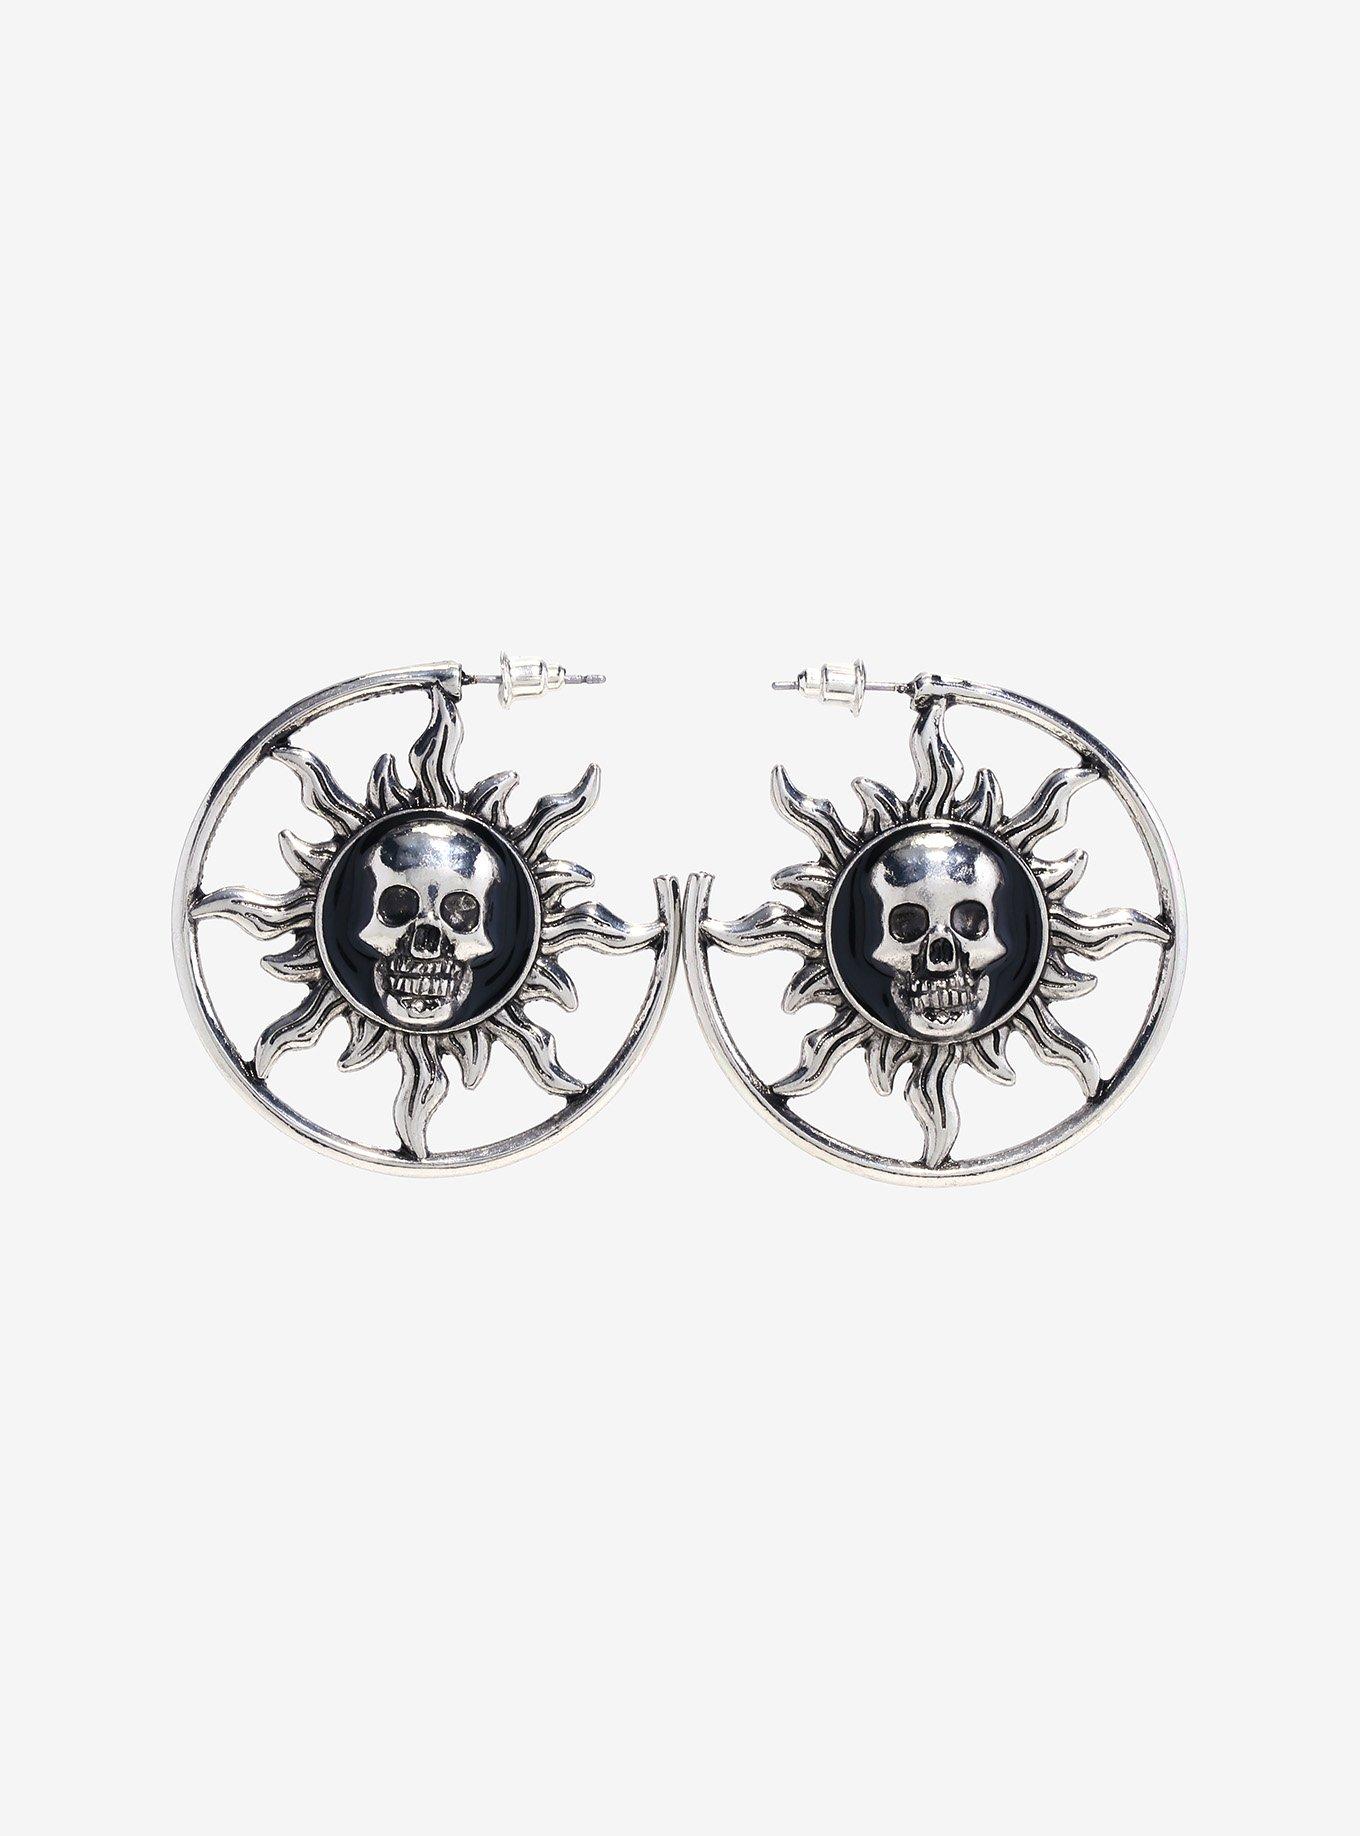 Cosmic Aura® Skull Sun Hoop Earrings